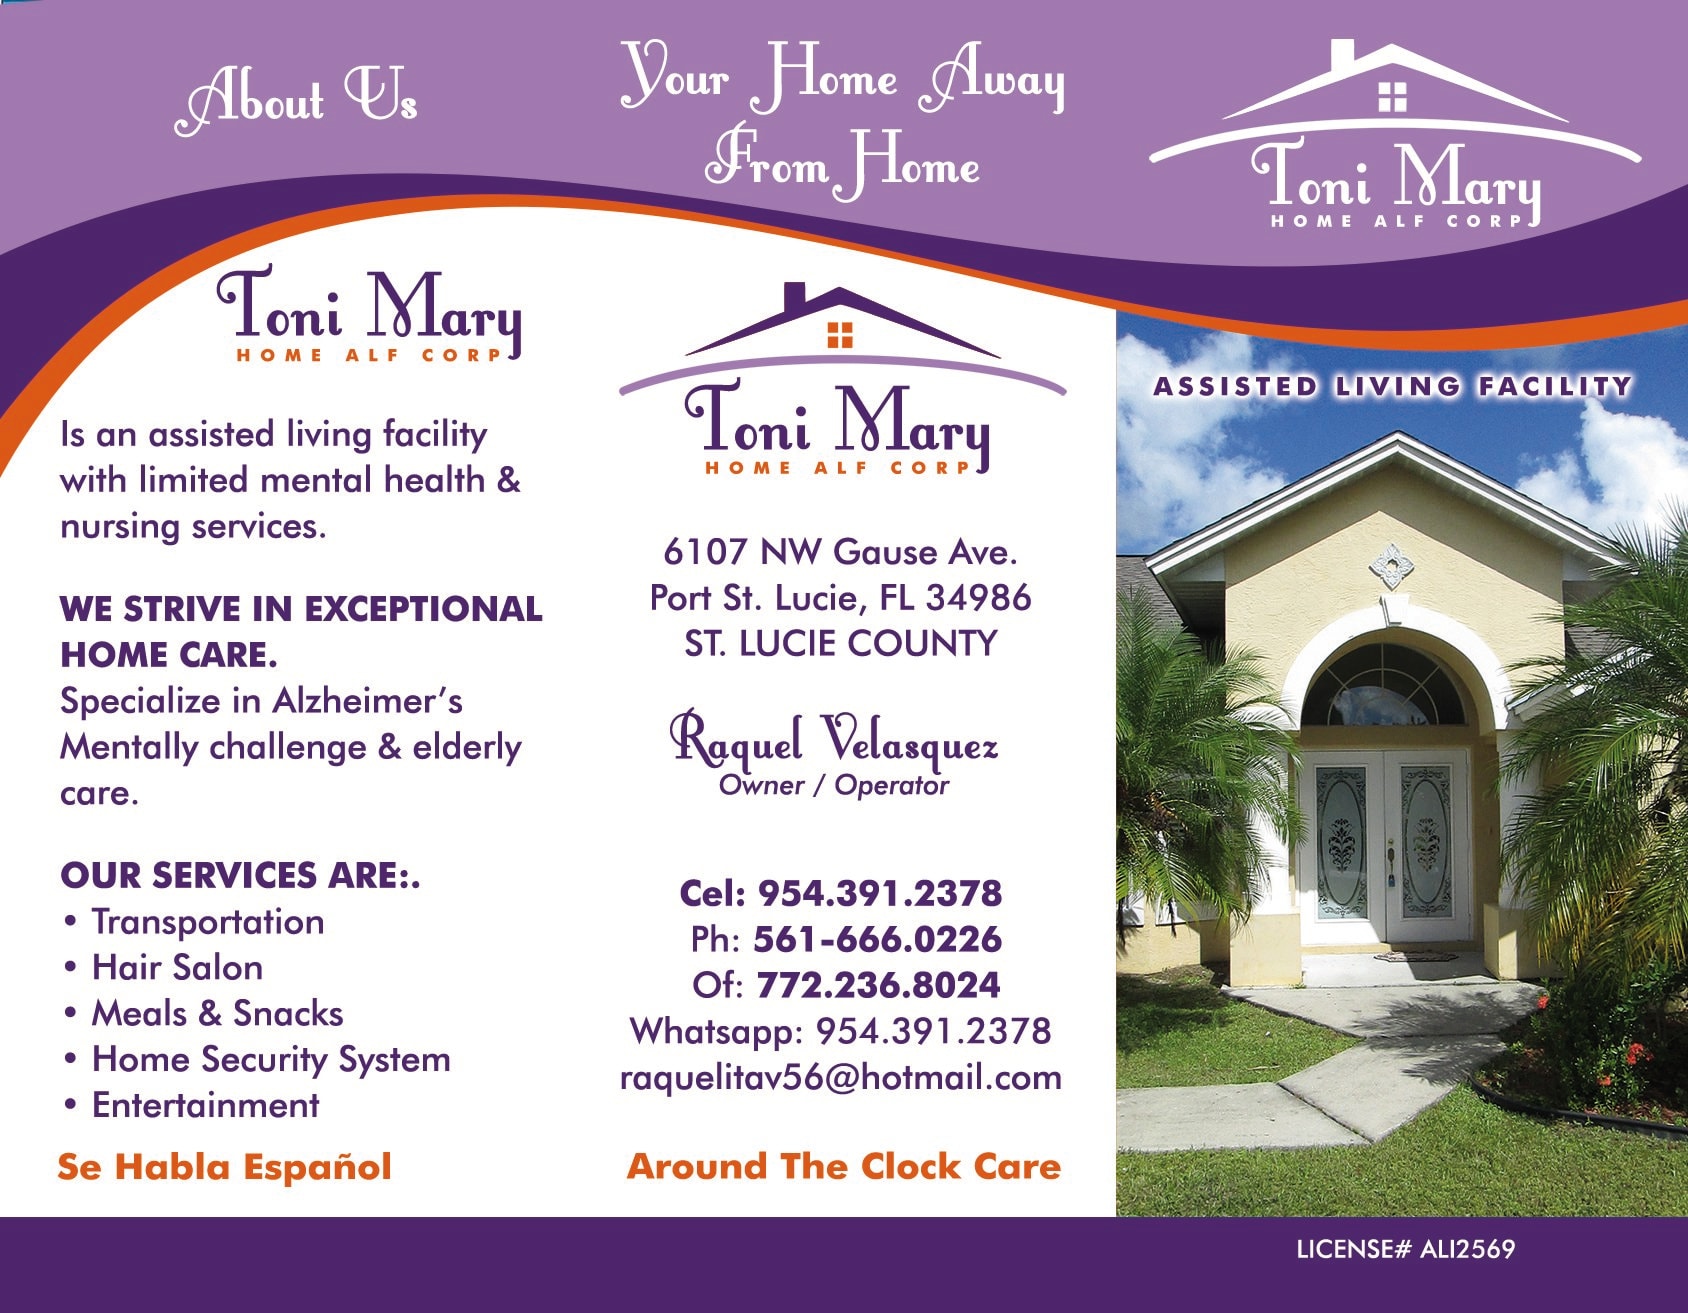 Toni Mary Home ALF Corp